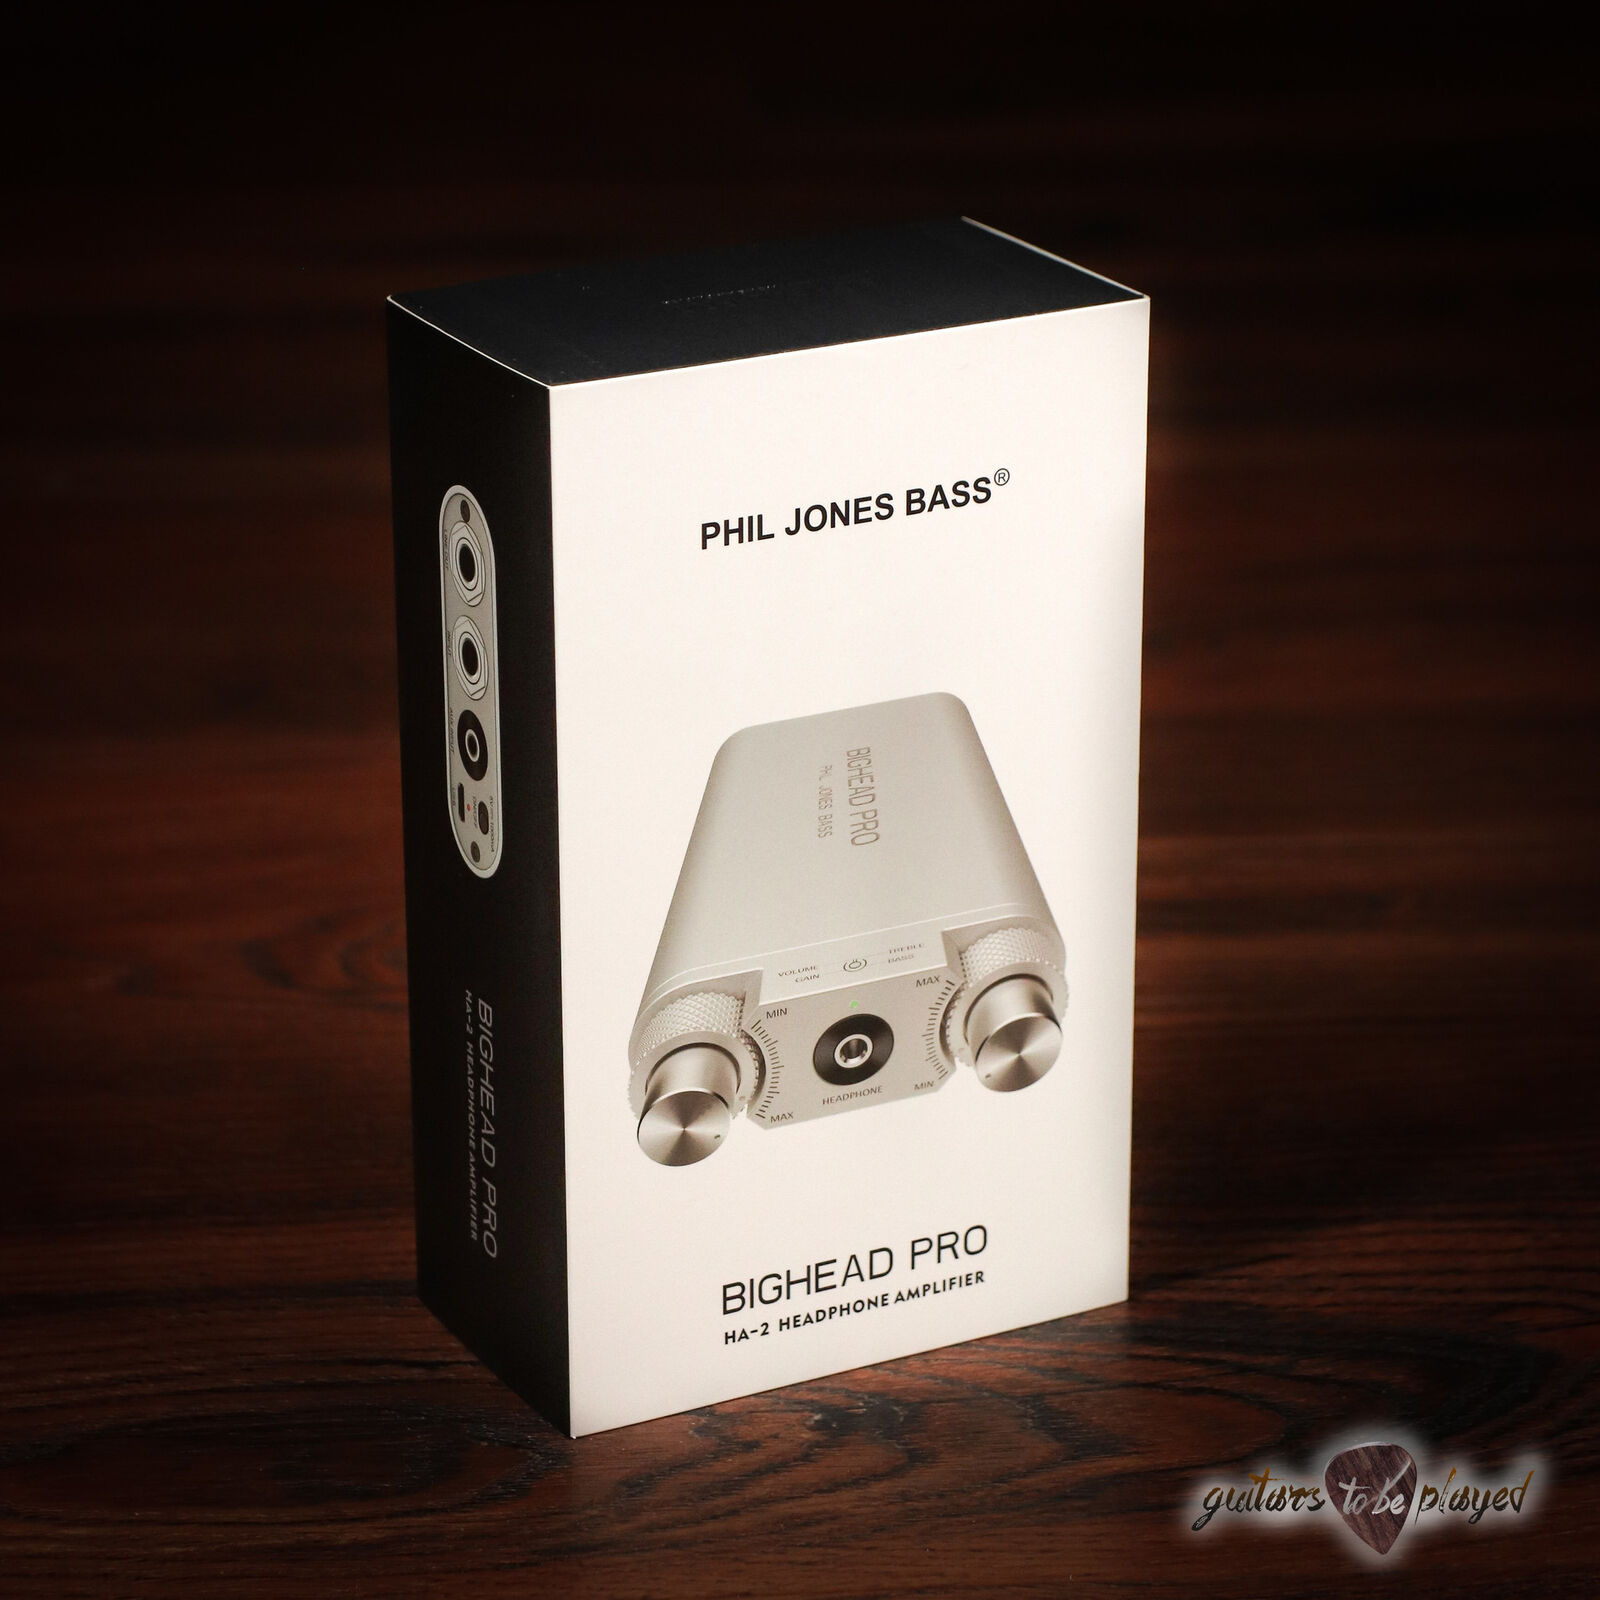 Phil Jones Bass Bighead Pro (HA-2) Headphone Amplifier & USB Audio Interface